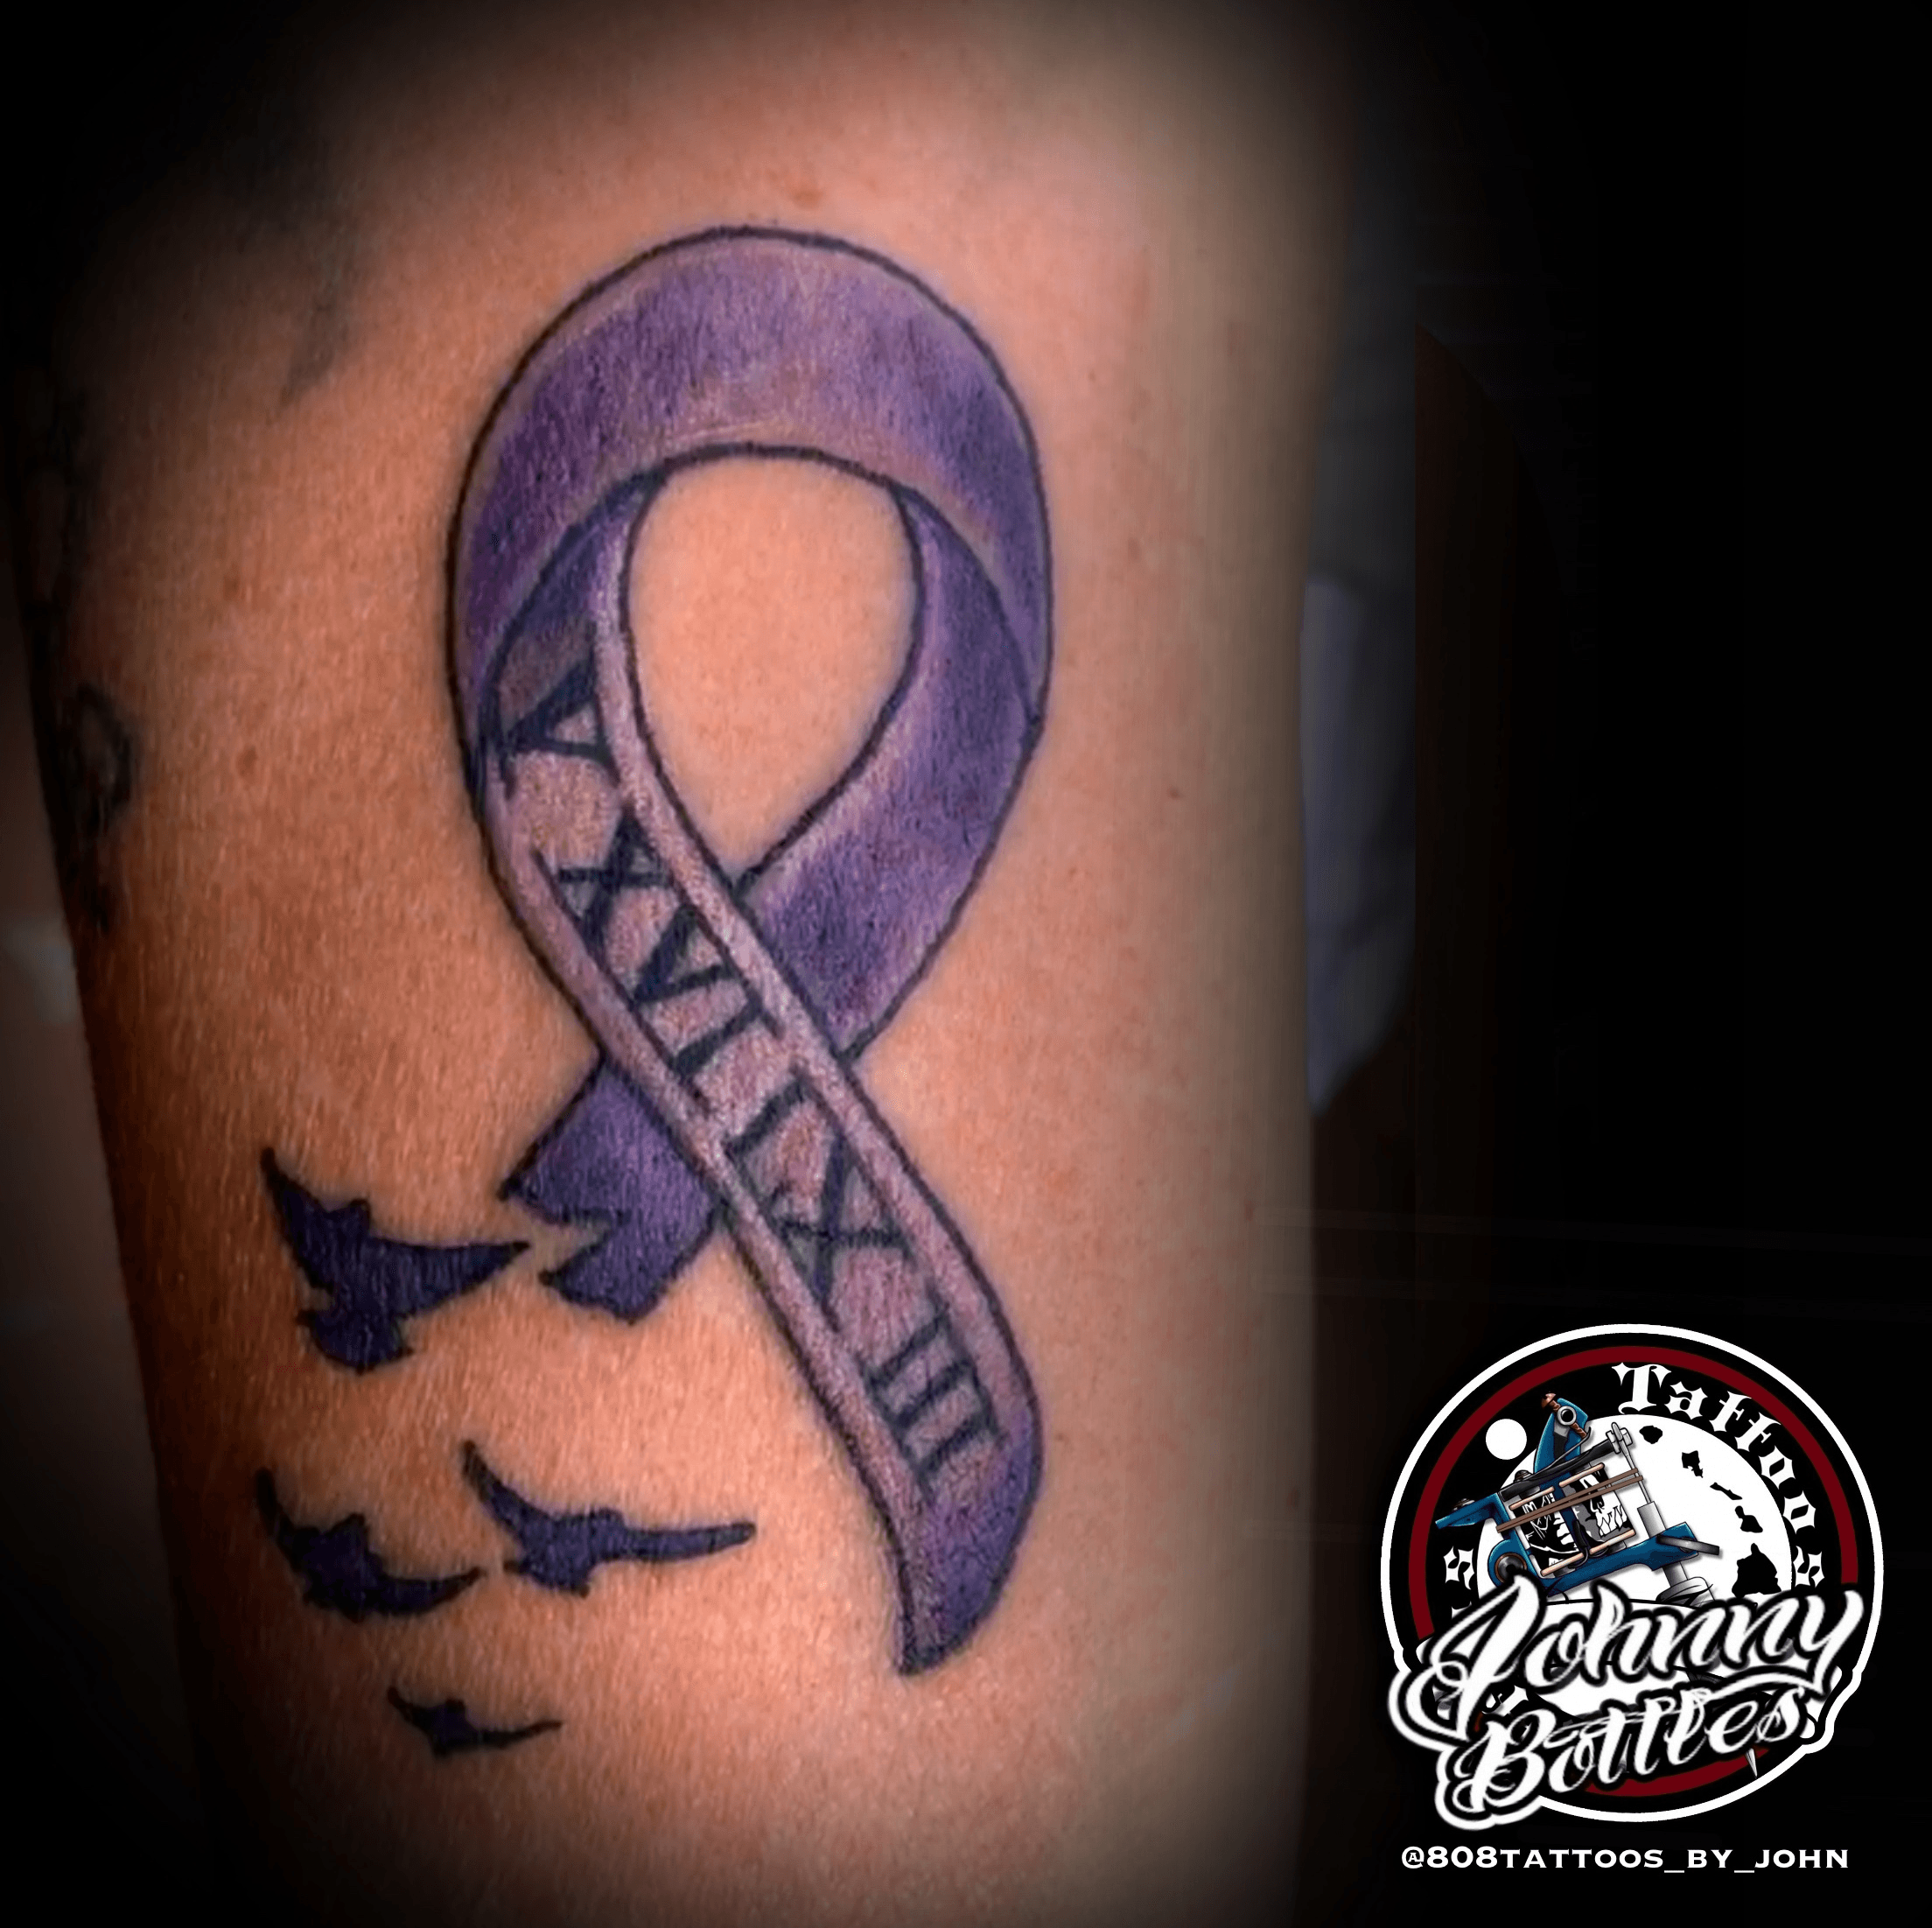 Tattoo uploaded by JOHNNY BOTTLES • Cancer Ribbon Tattoo • Tattoodo